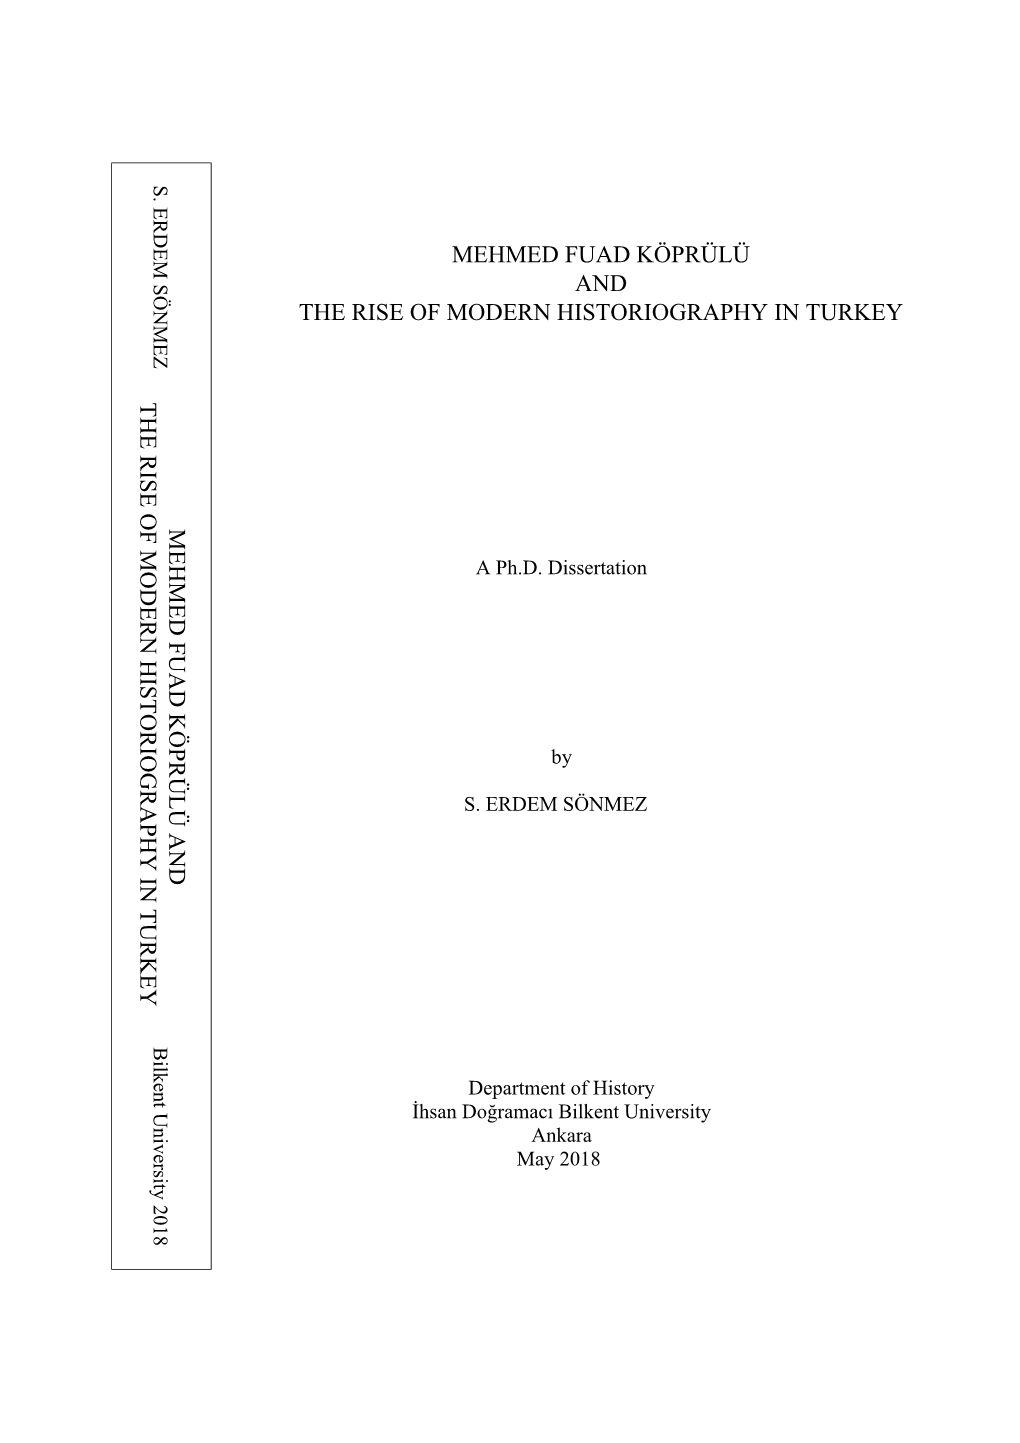 Mehmed Fuad Köprülü and the Rise of Modern Historiography in Turkey the Rise of Modern Historiography in Turkey Mehmed Fuad Köprülü And